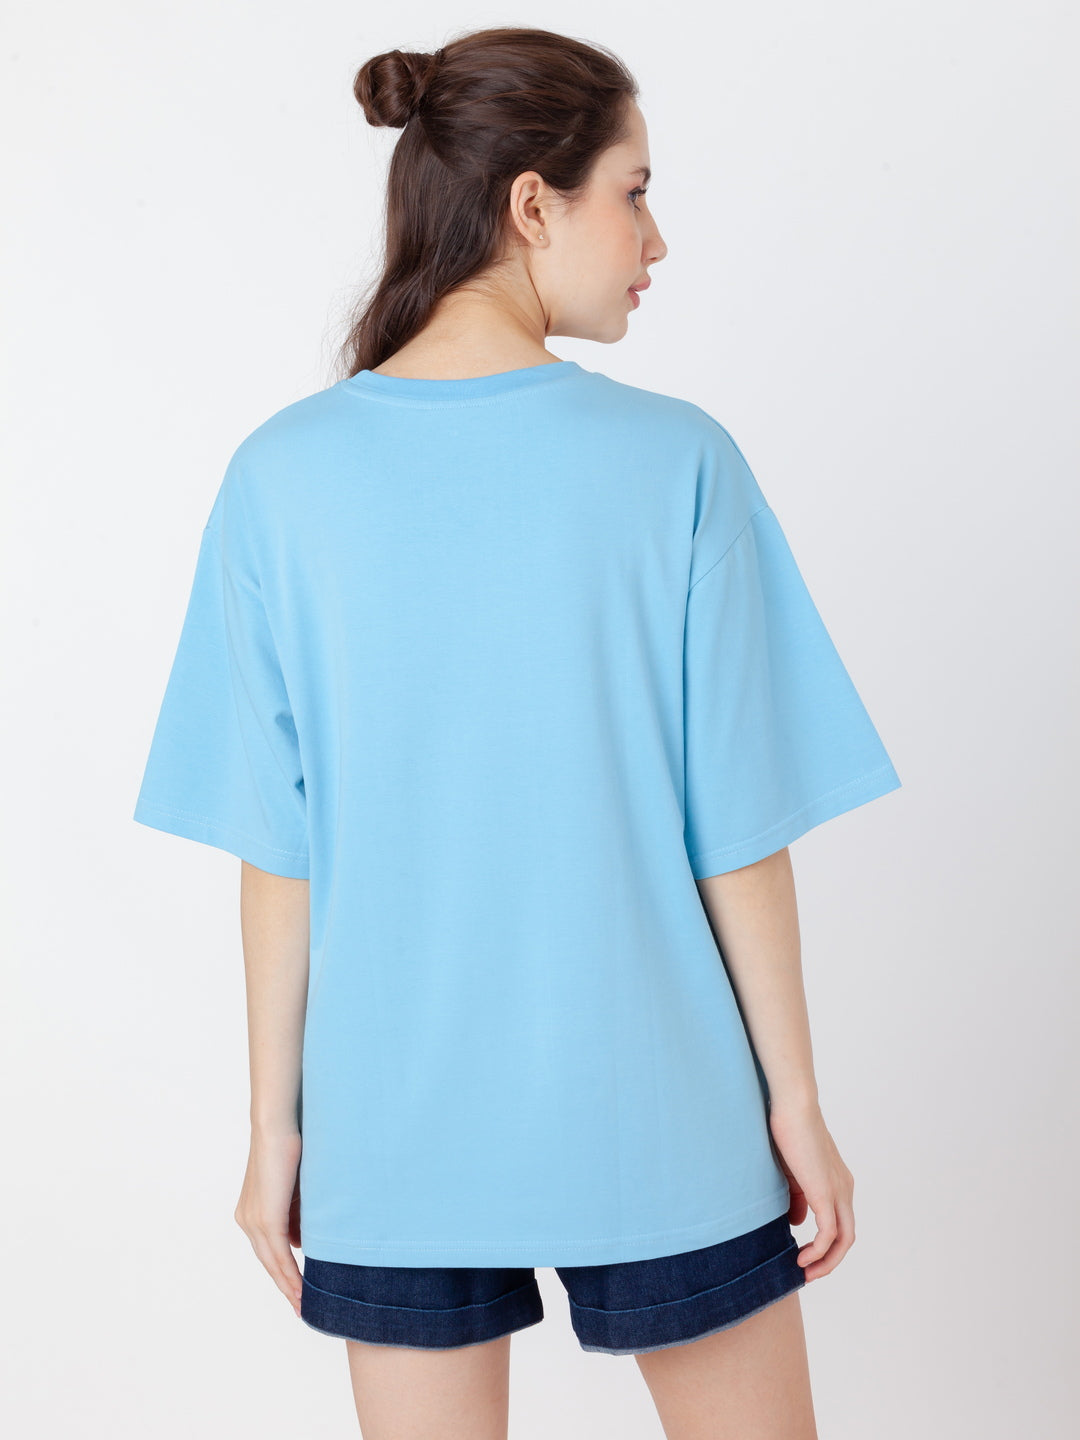 Blue_Printed_Regular_T-Shirt_4